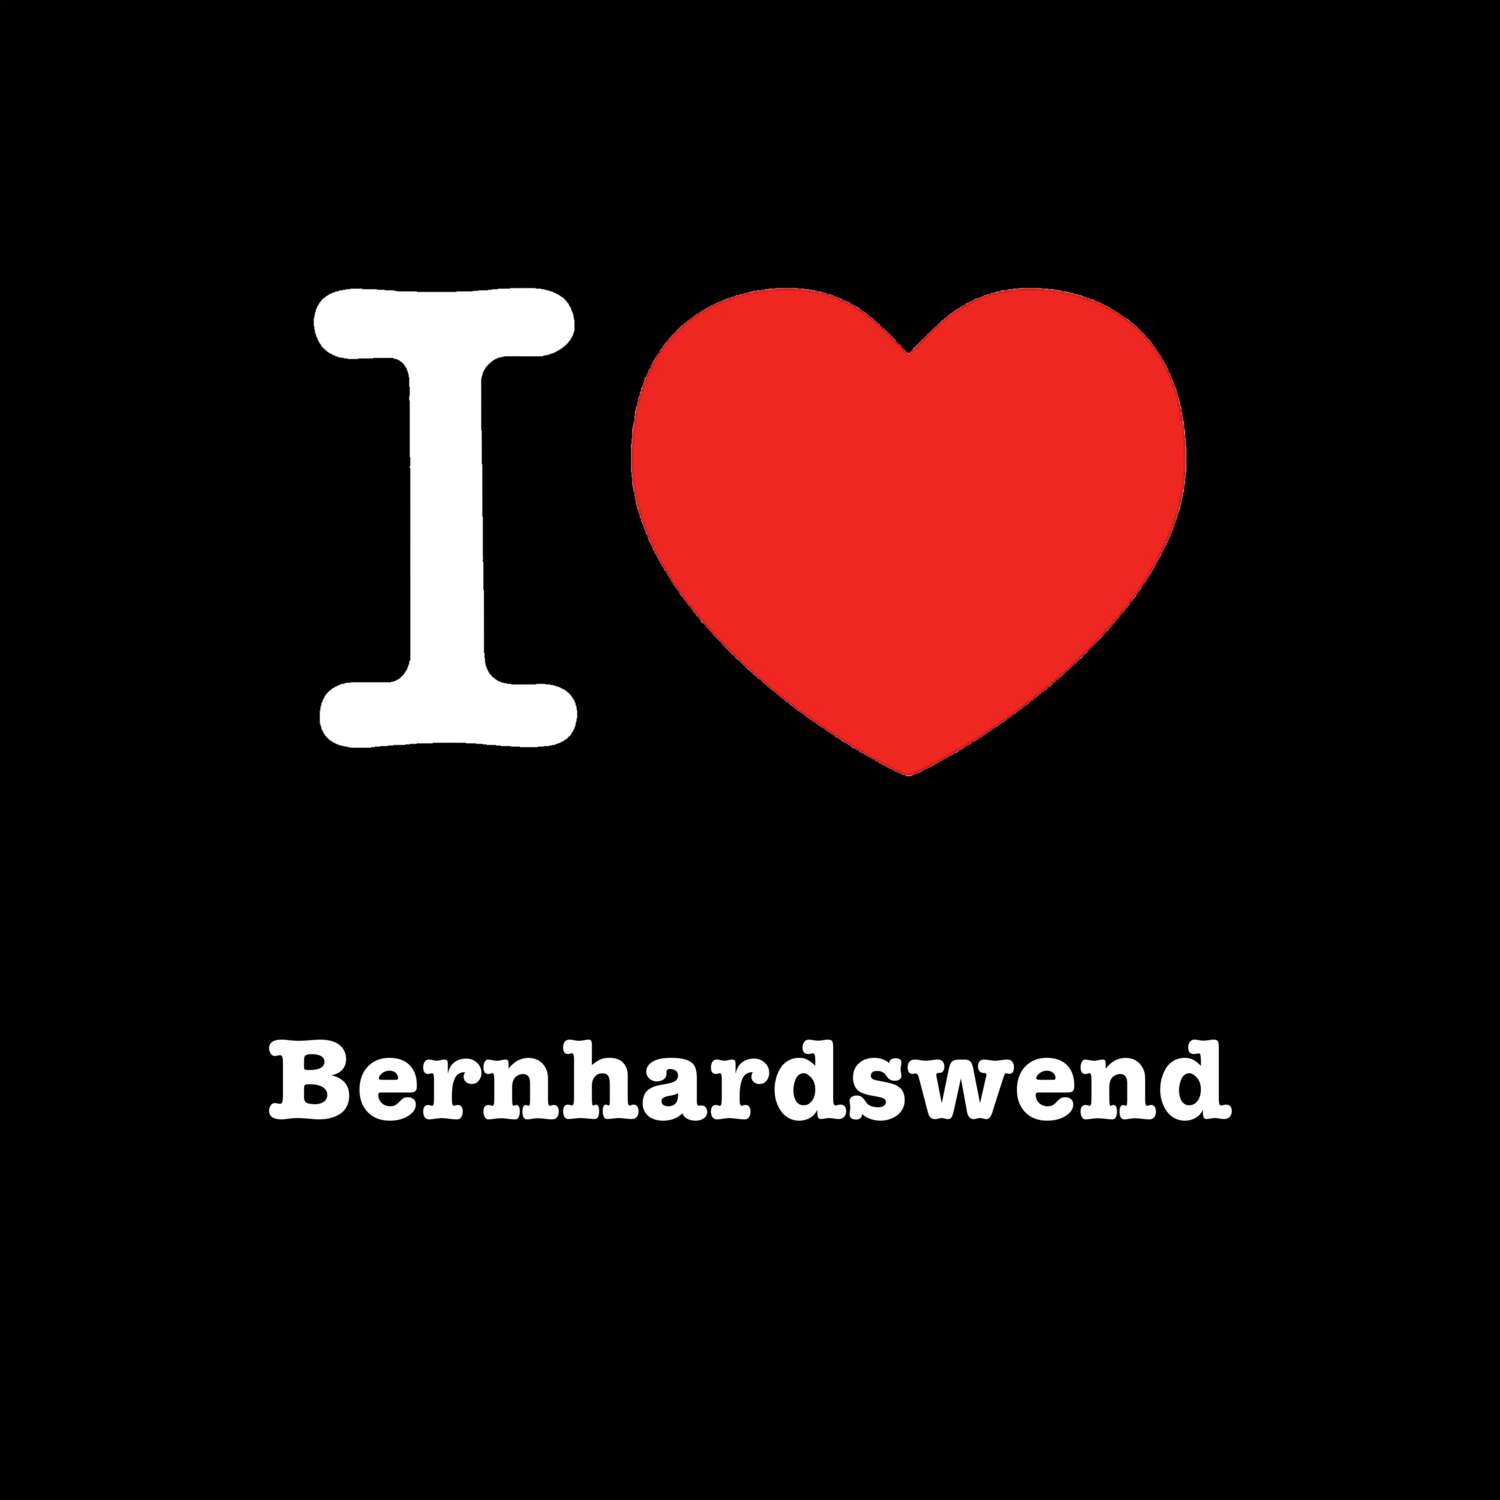 Bernhardswend T-Shirt »I love«